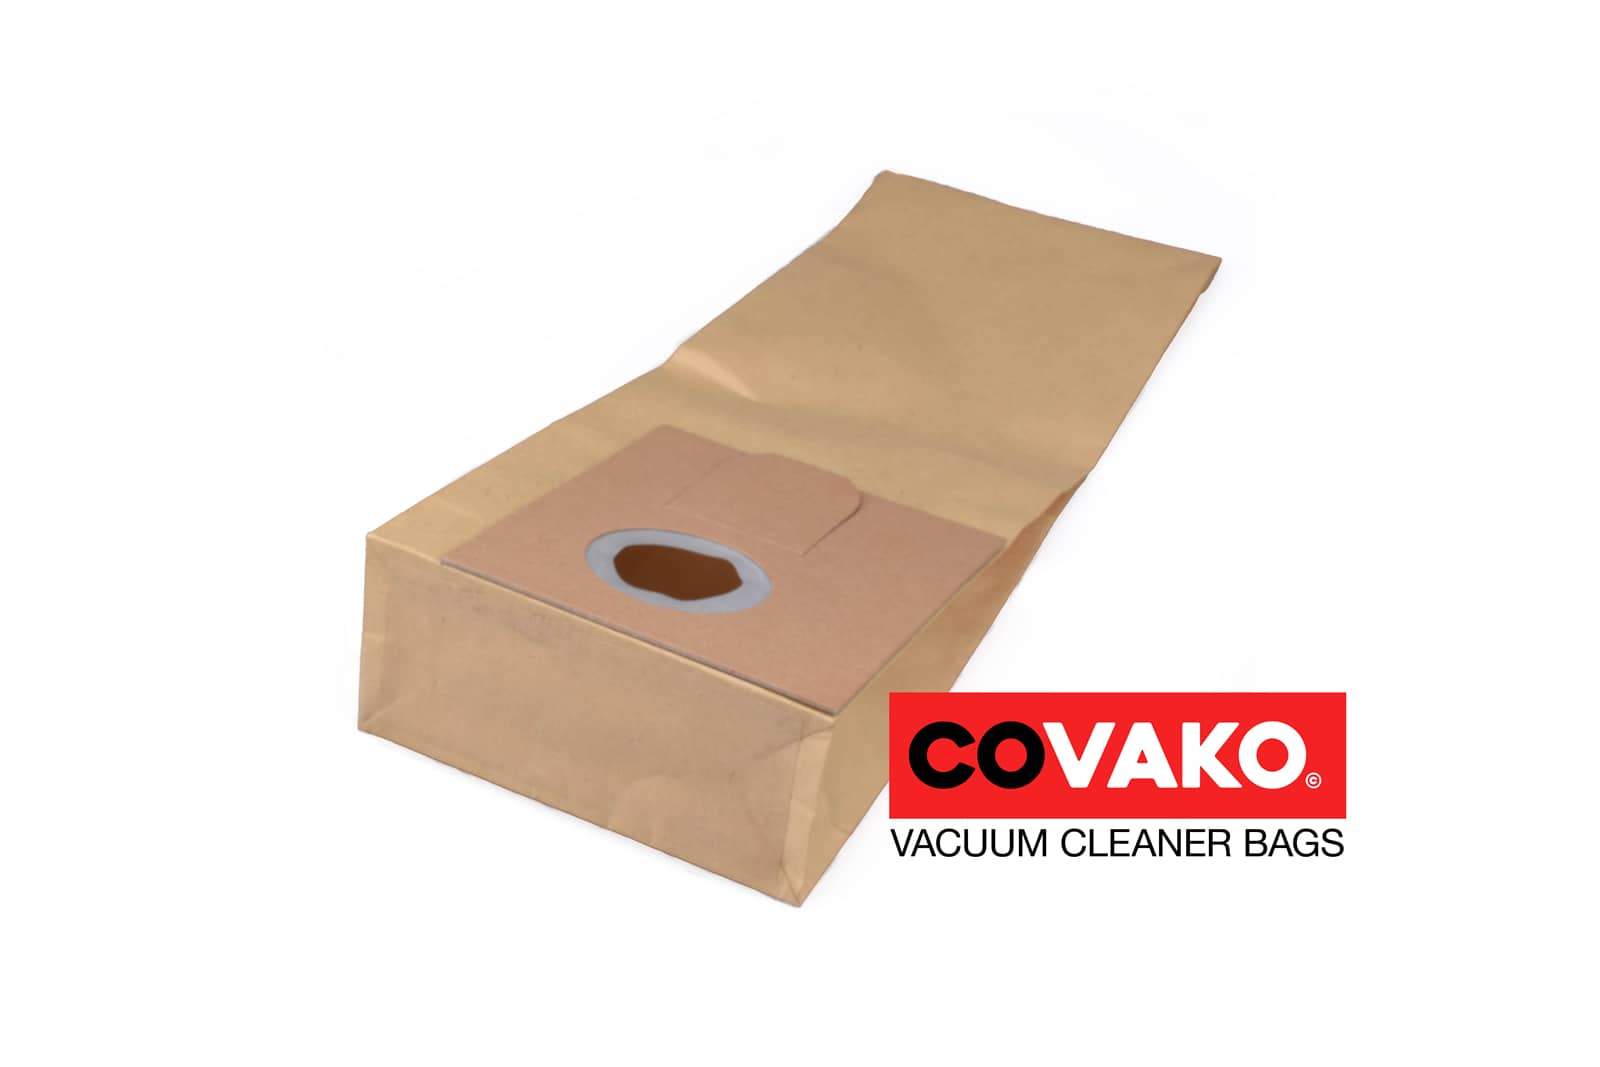 Fast BS 450 / Paper - Fast vacuum cleaner bags